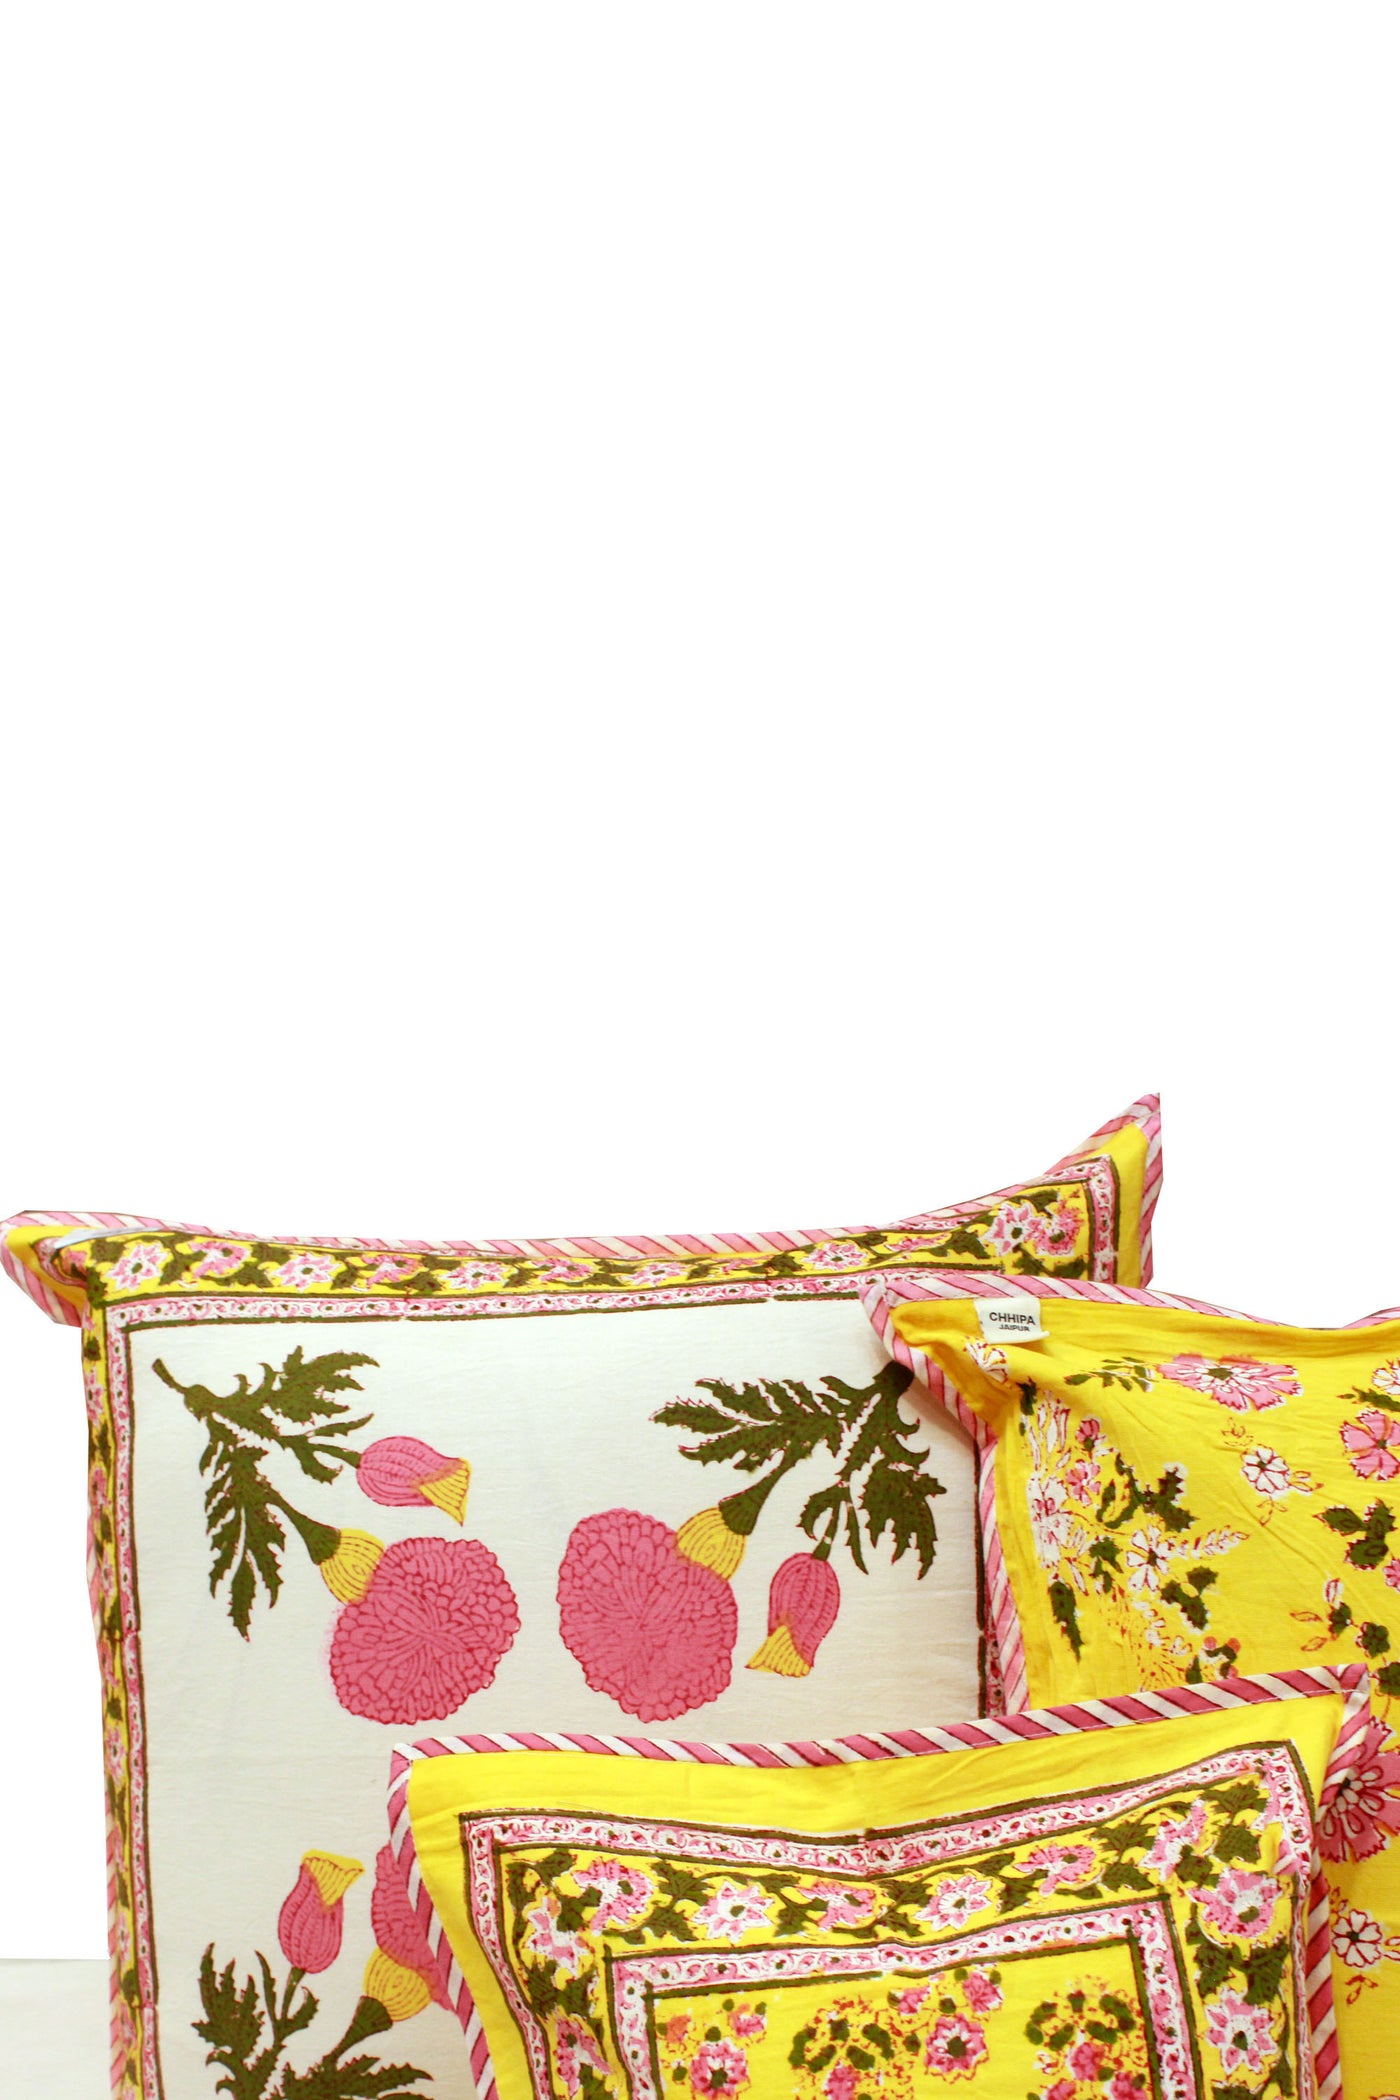 Cotton Flower Buti Hand Block Printed Cushion Cover in Sodium Yellow